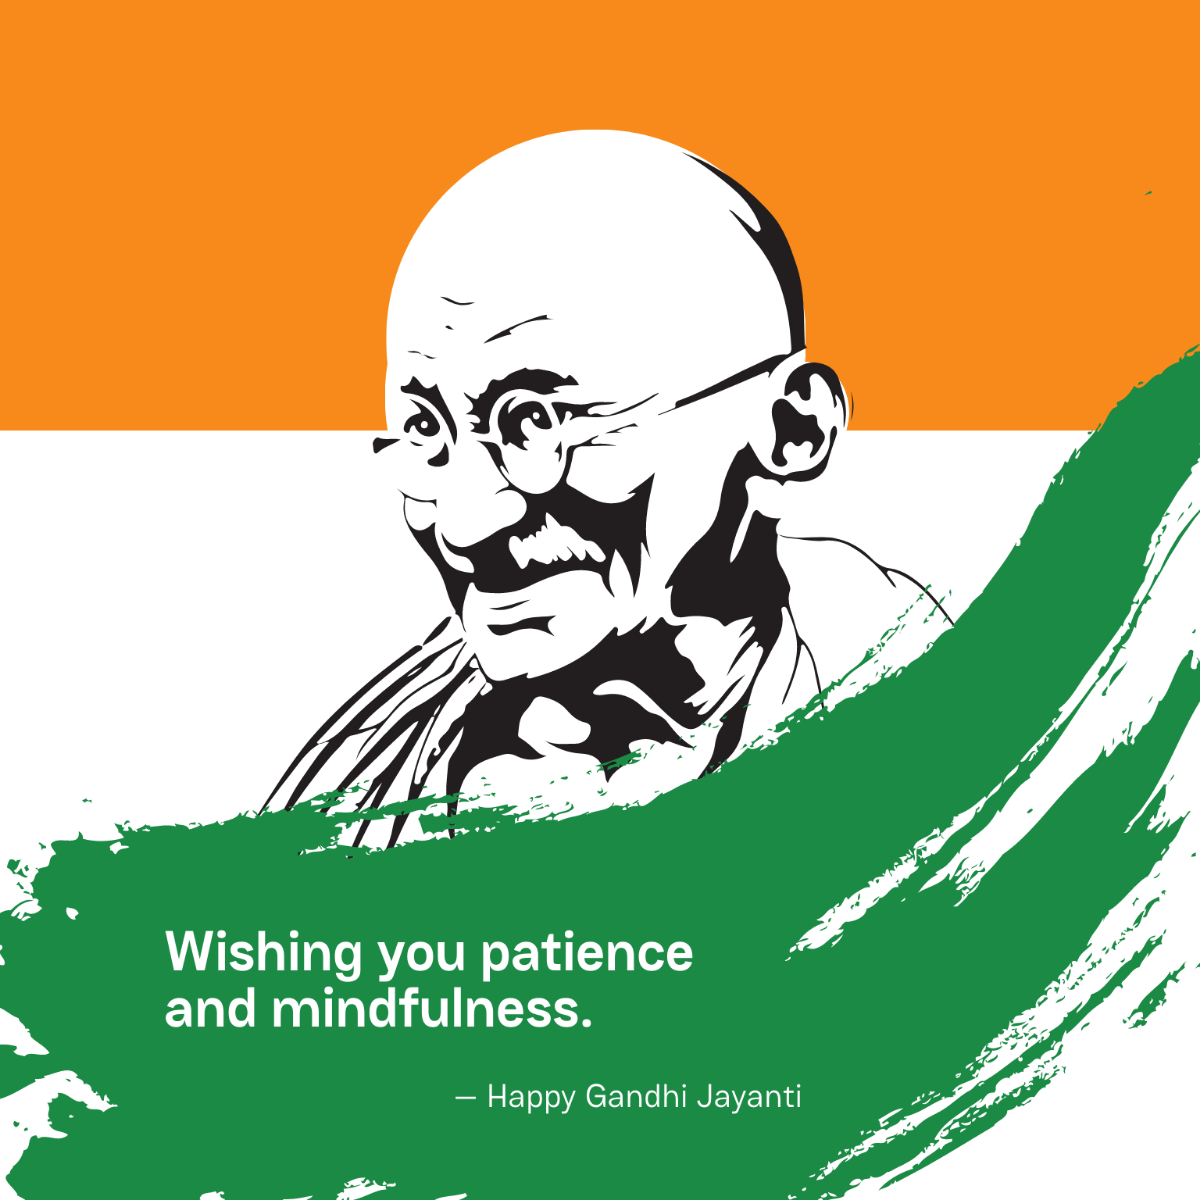 Gandhi Jayanti Wishes Vector Template